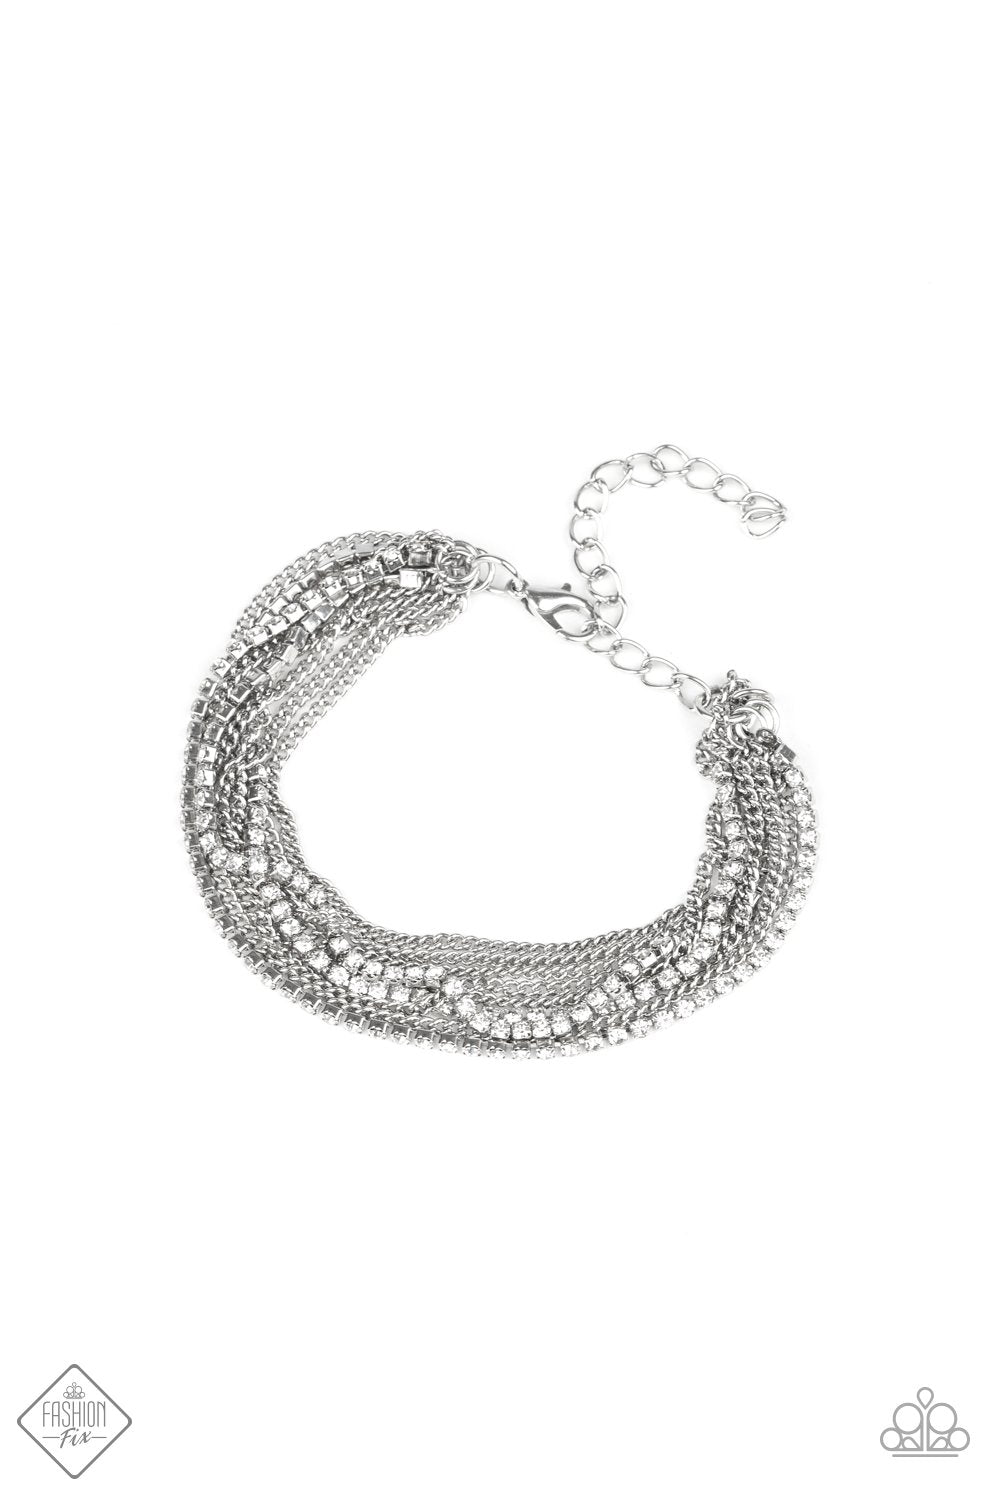 SLEEK After SLEEK Silver Chain and White Rhinestone Bracelet - Paparazzi Accessories-CarasShop.com - $5 Jewelry by Cara Jewels